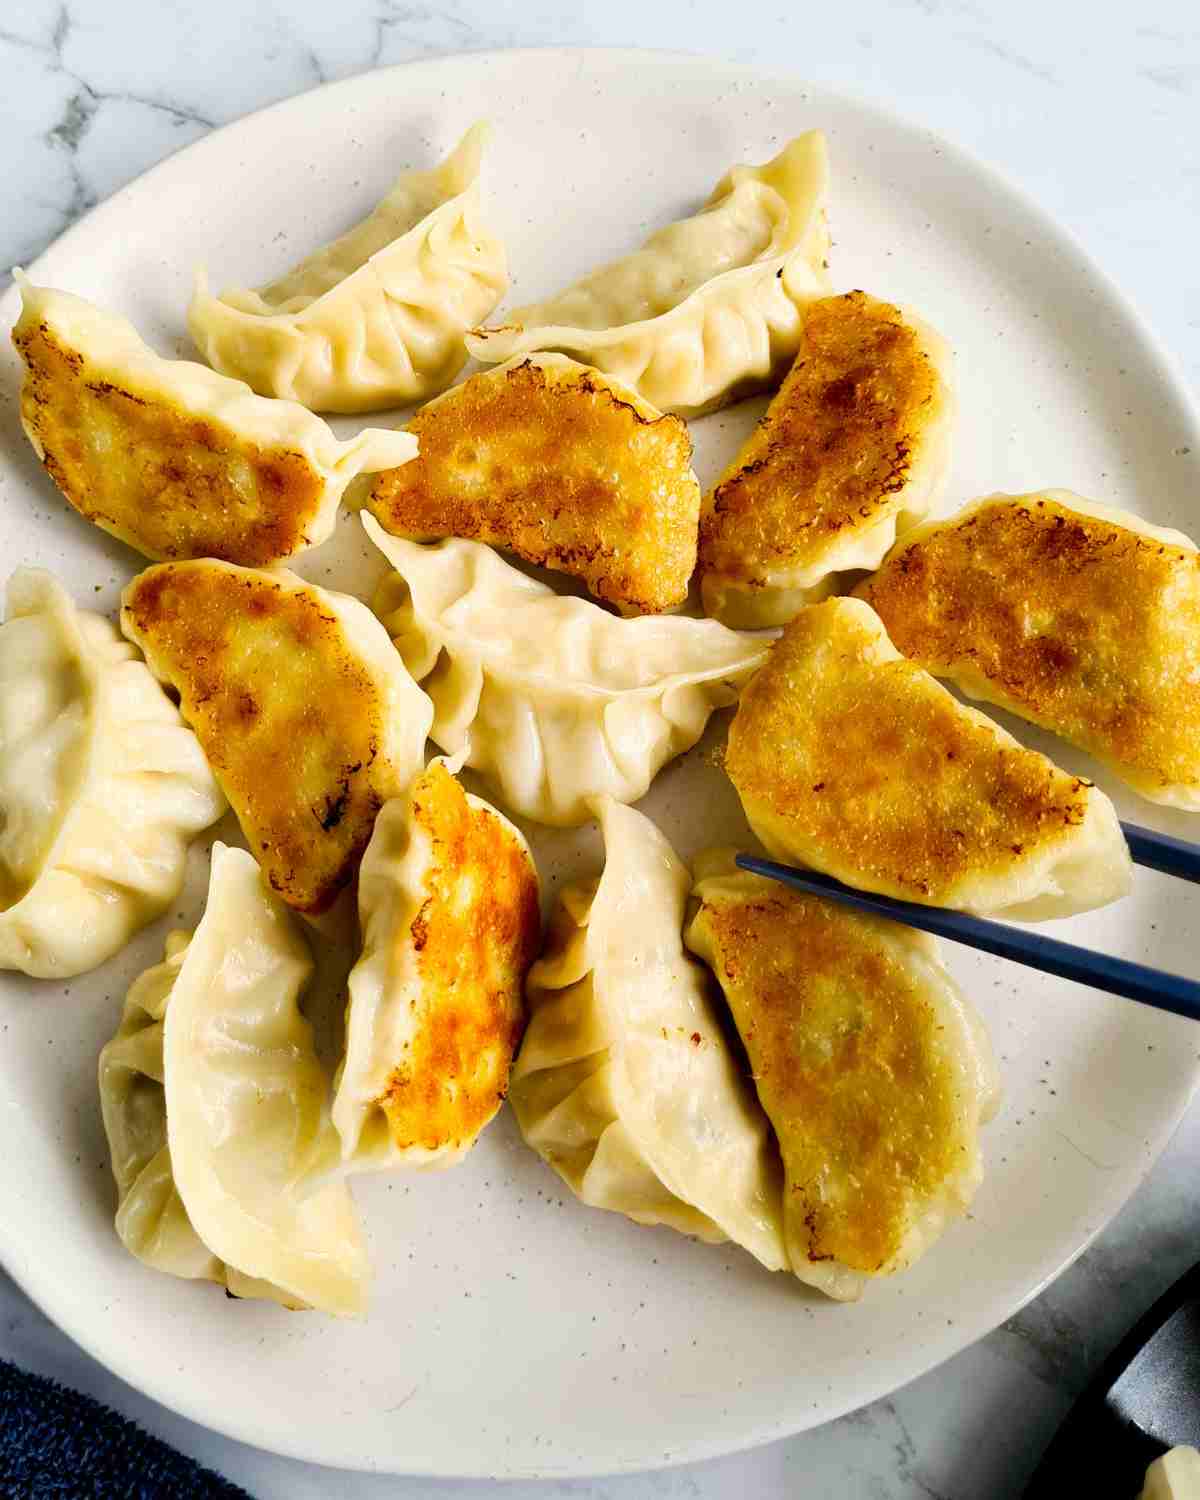 Pan fried dumplings on a large white plate